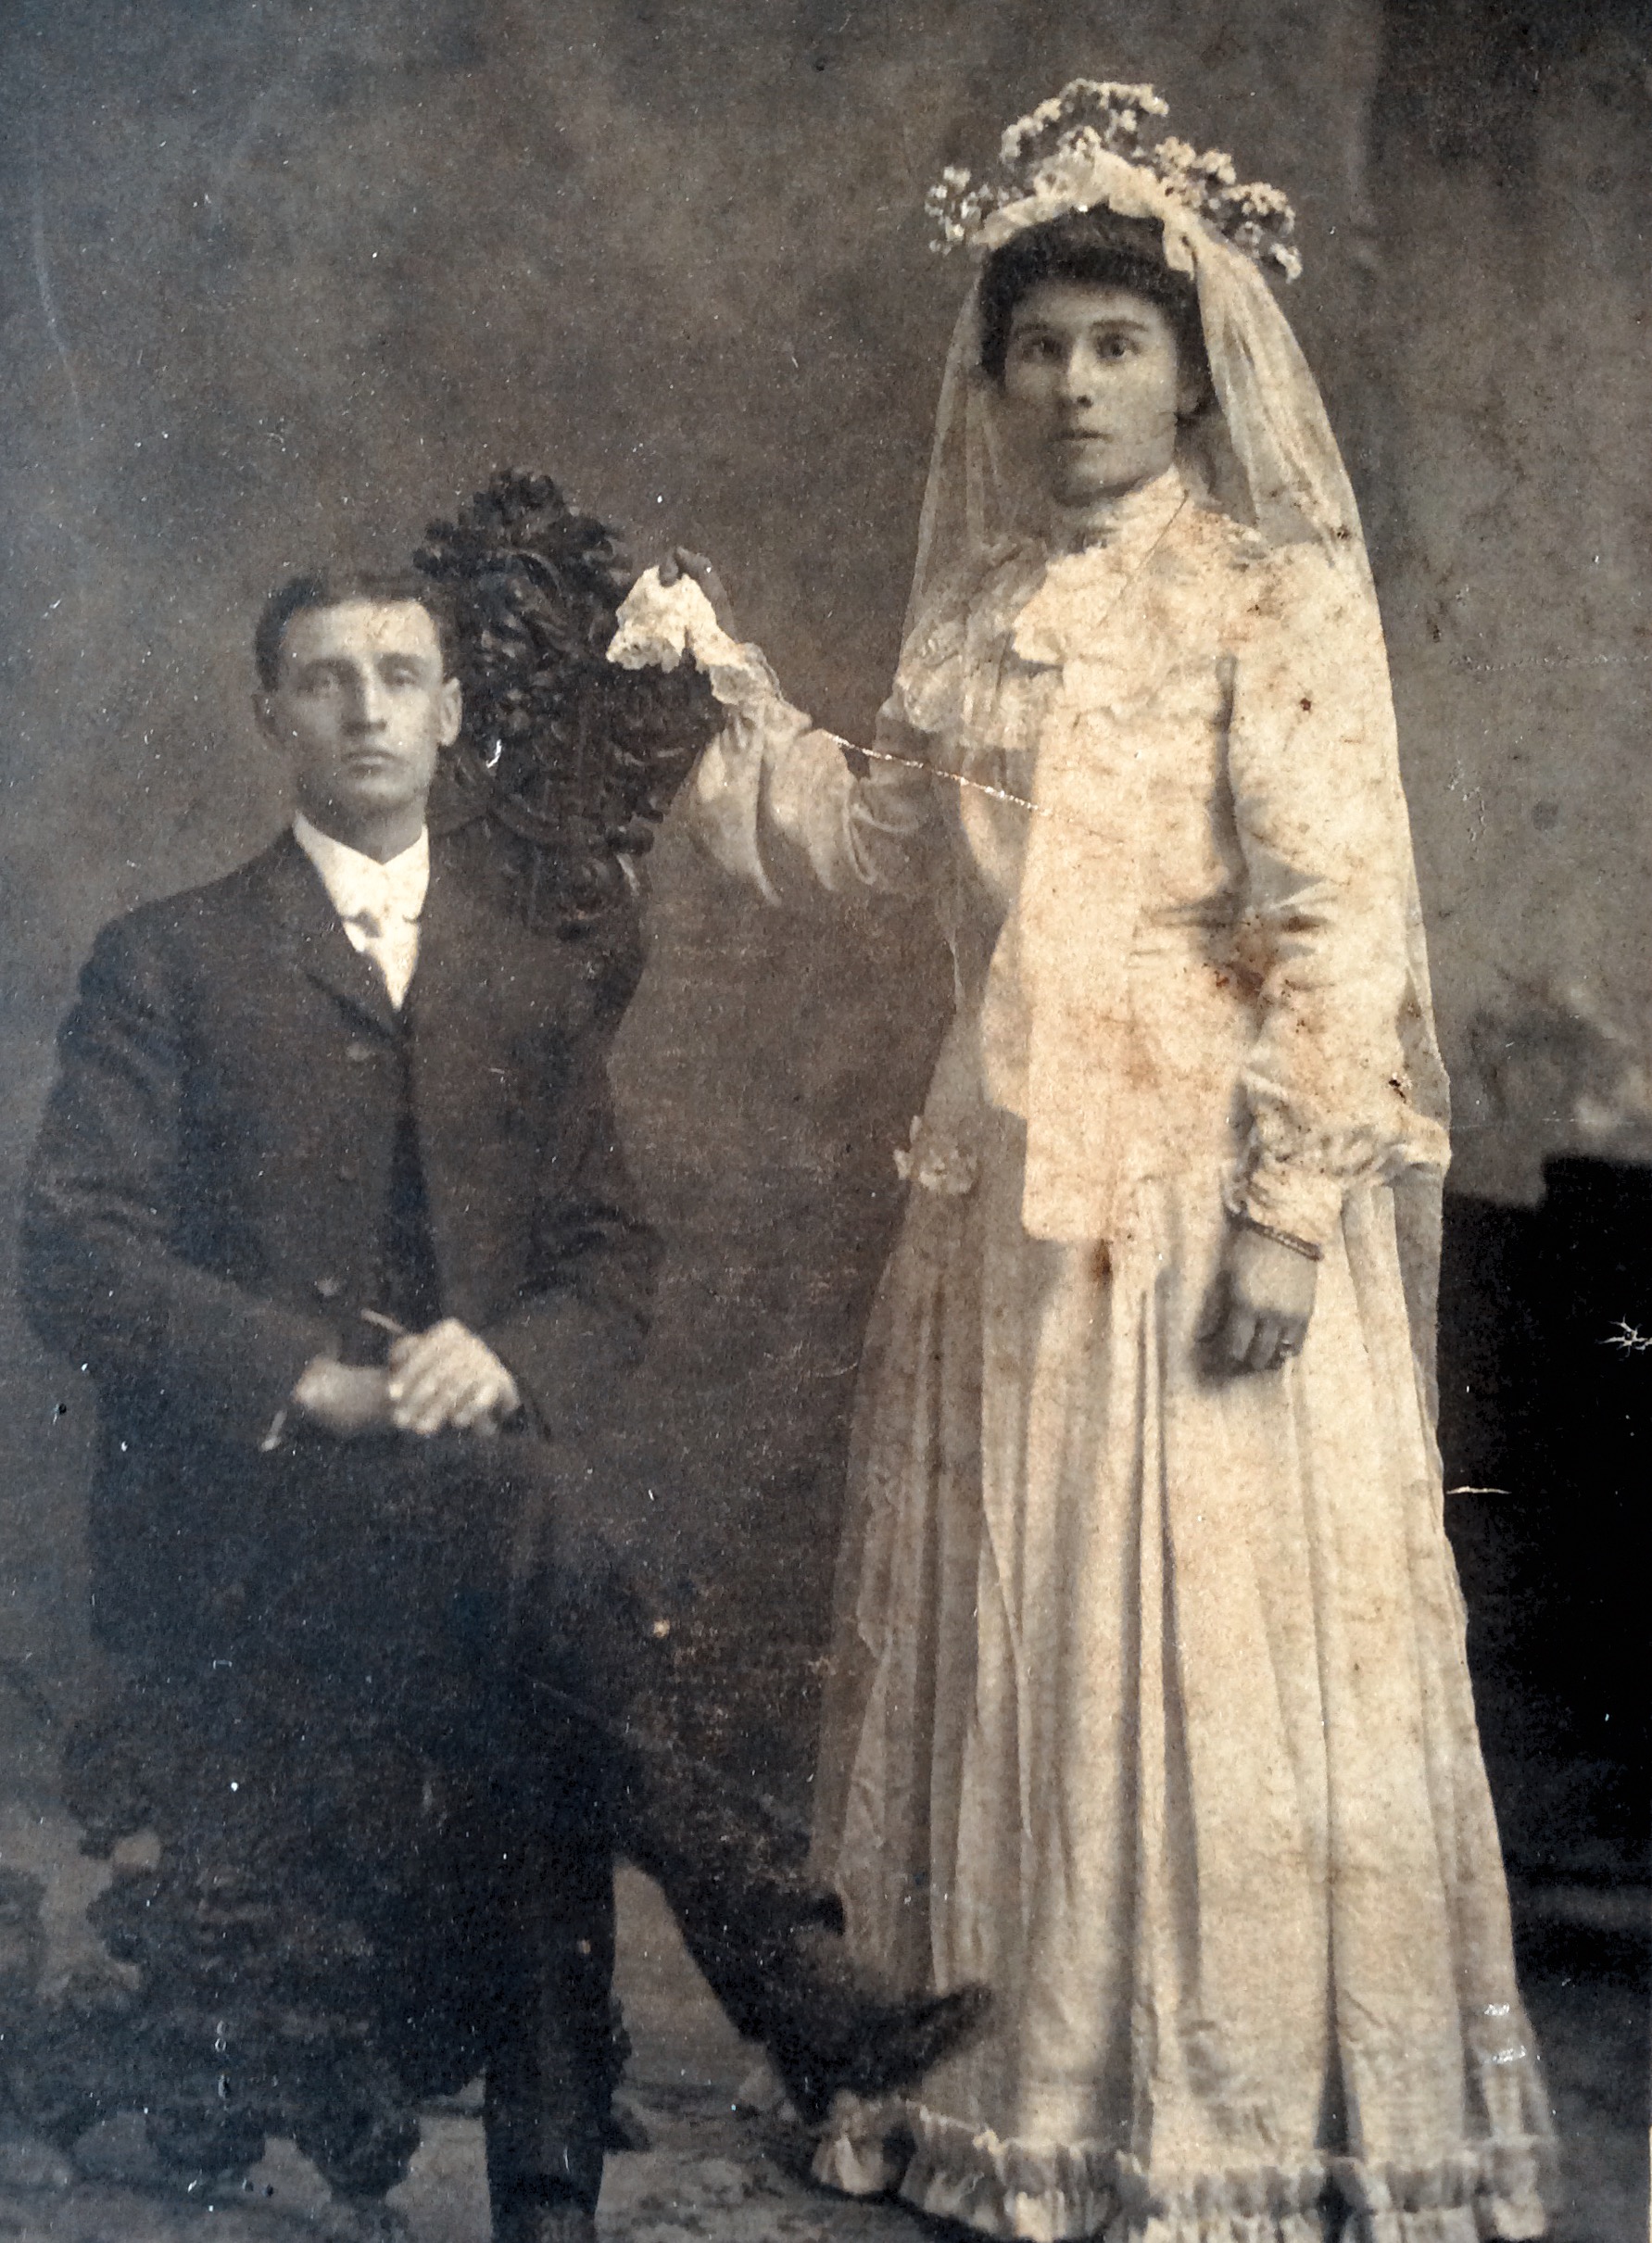 Wedding Photo of Gilbert Ferris ( 1878 - 1985) and Erie Ethel Newell (1883-1955) wedding Date 21 Dec.1904